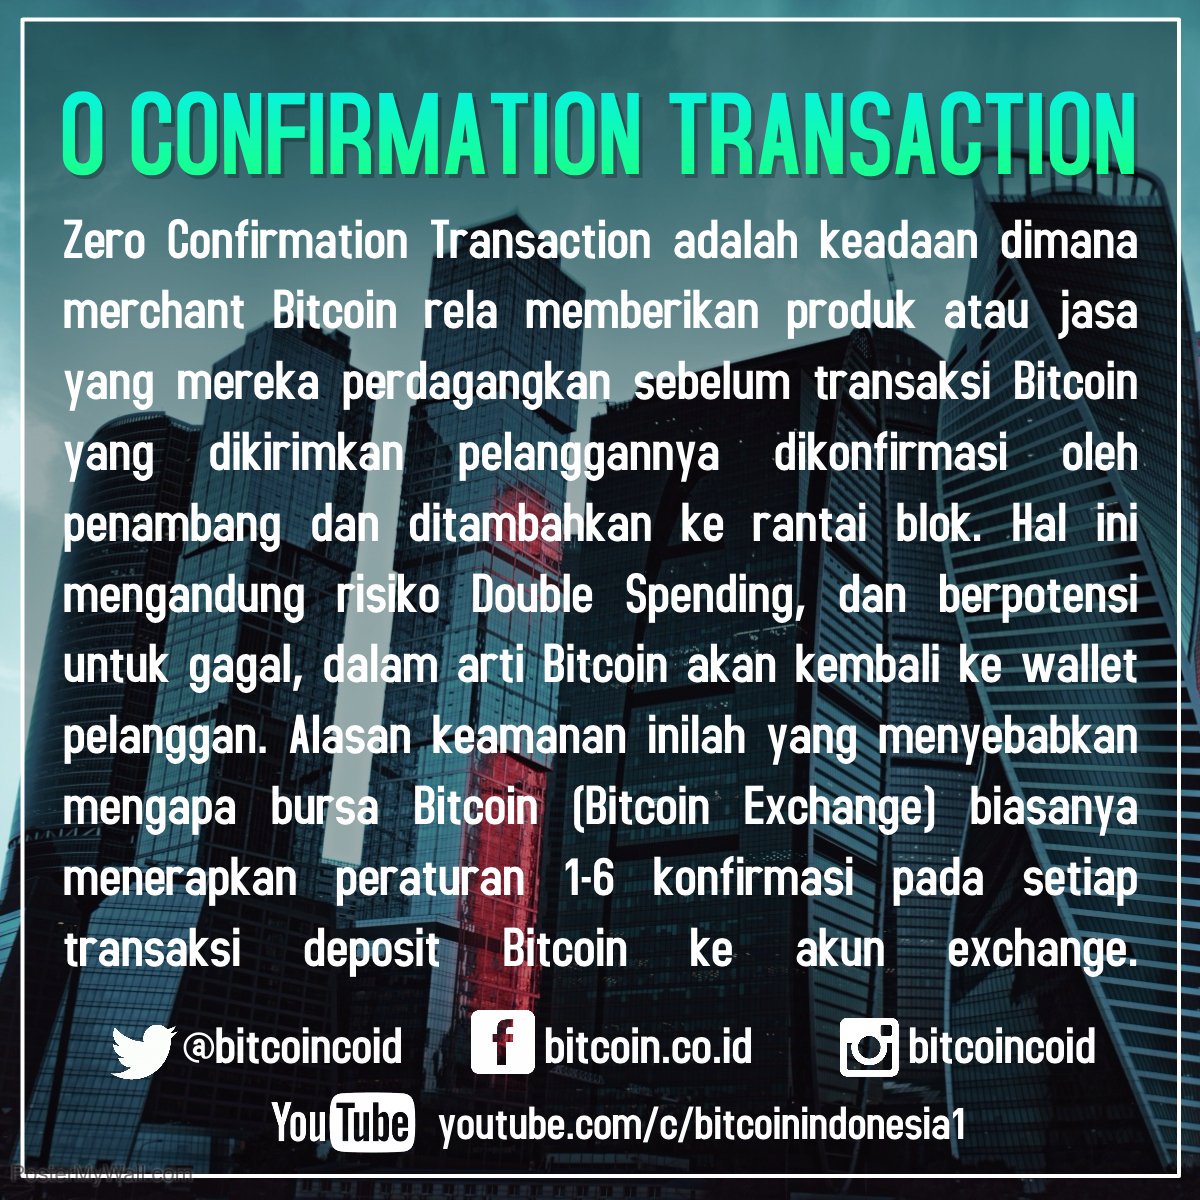 Zero-confirmation transaction 